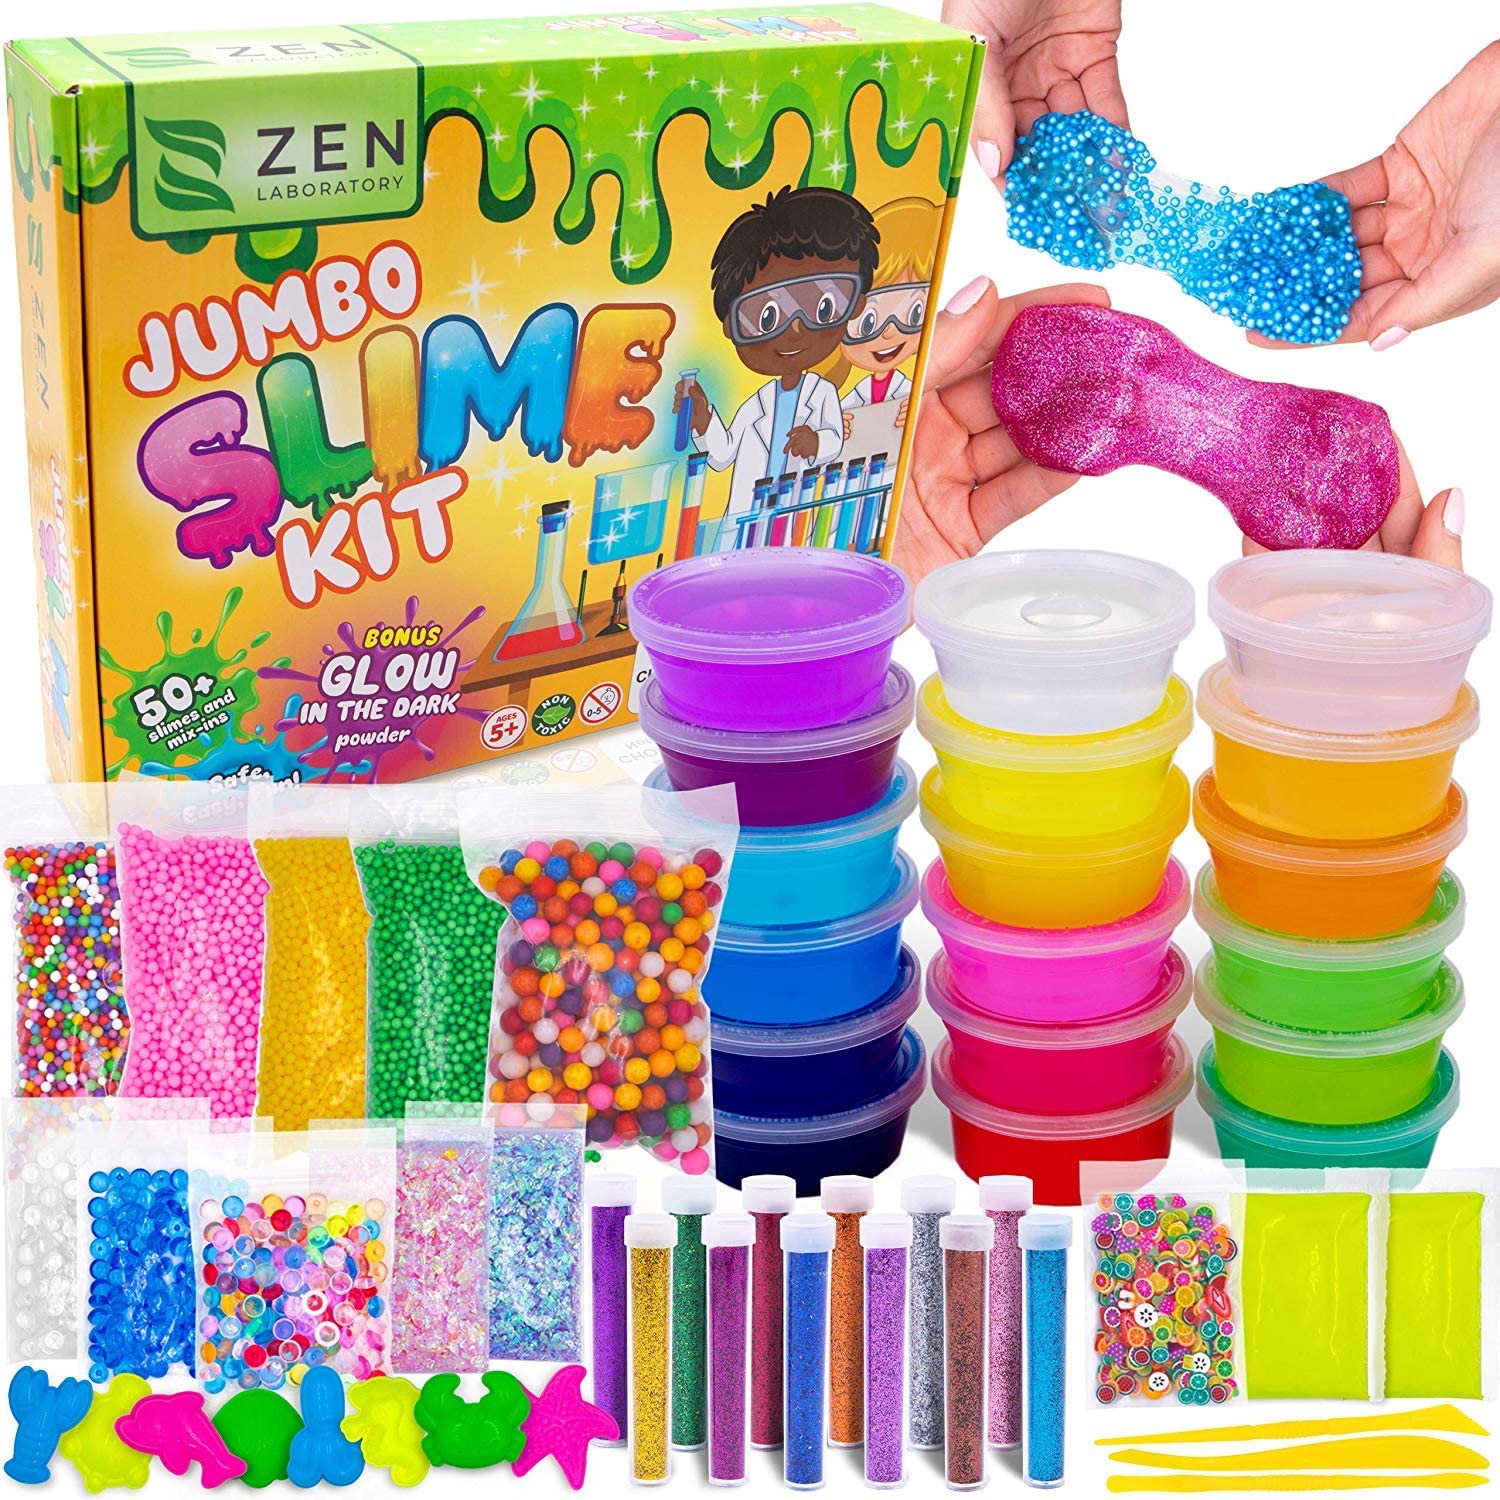 Zen Laboratory Non-Toxic Slime Kit Girls’ Toy